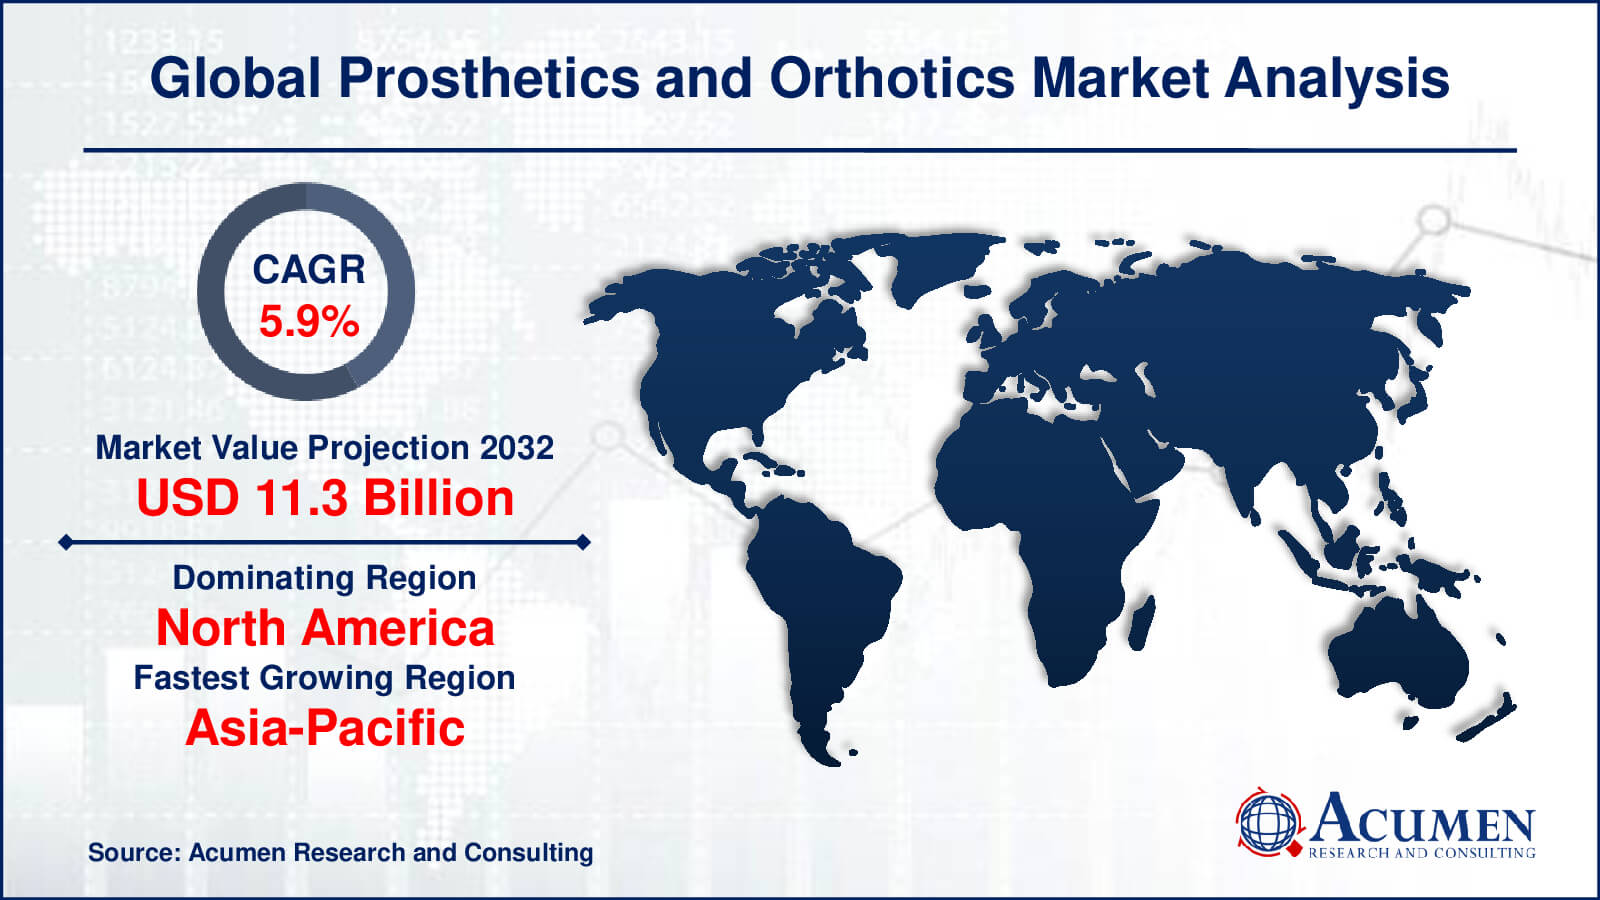 Prosthetics and Orthotics Market Dynamics